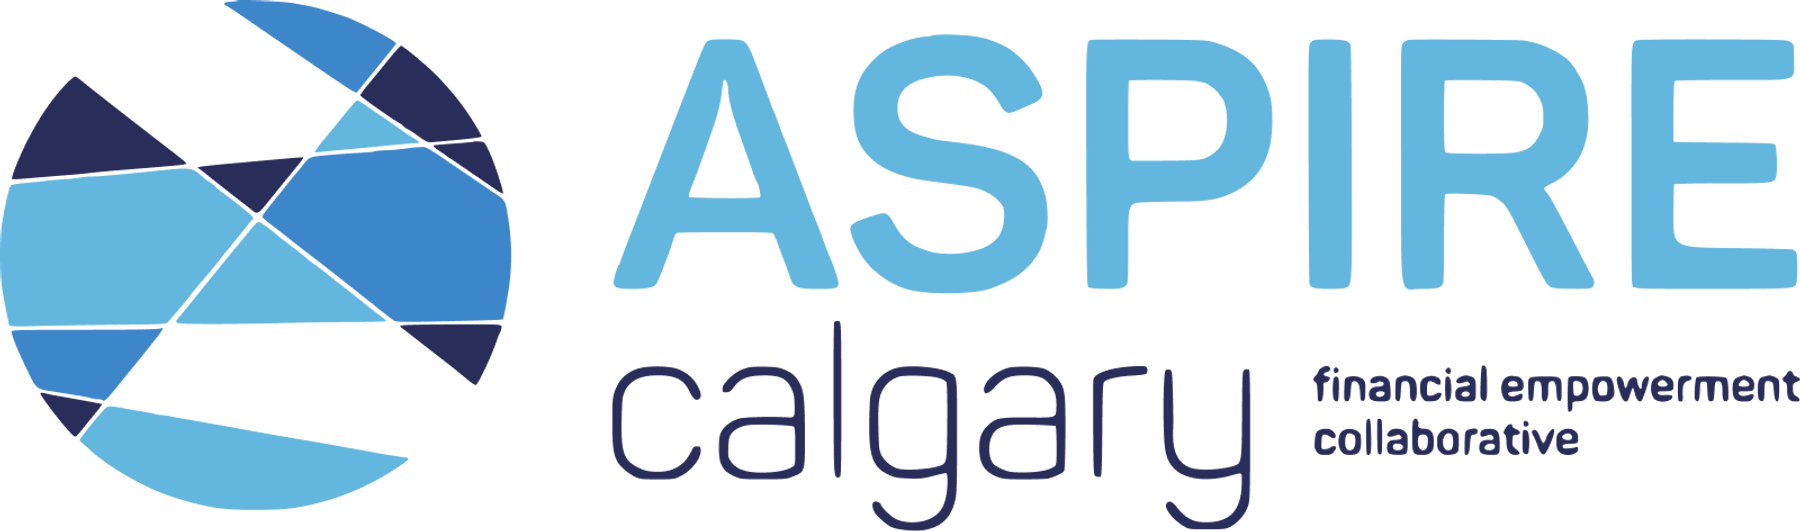 Aspire Calgary logo on a transparent background